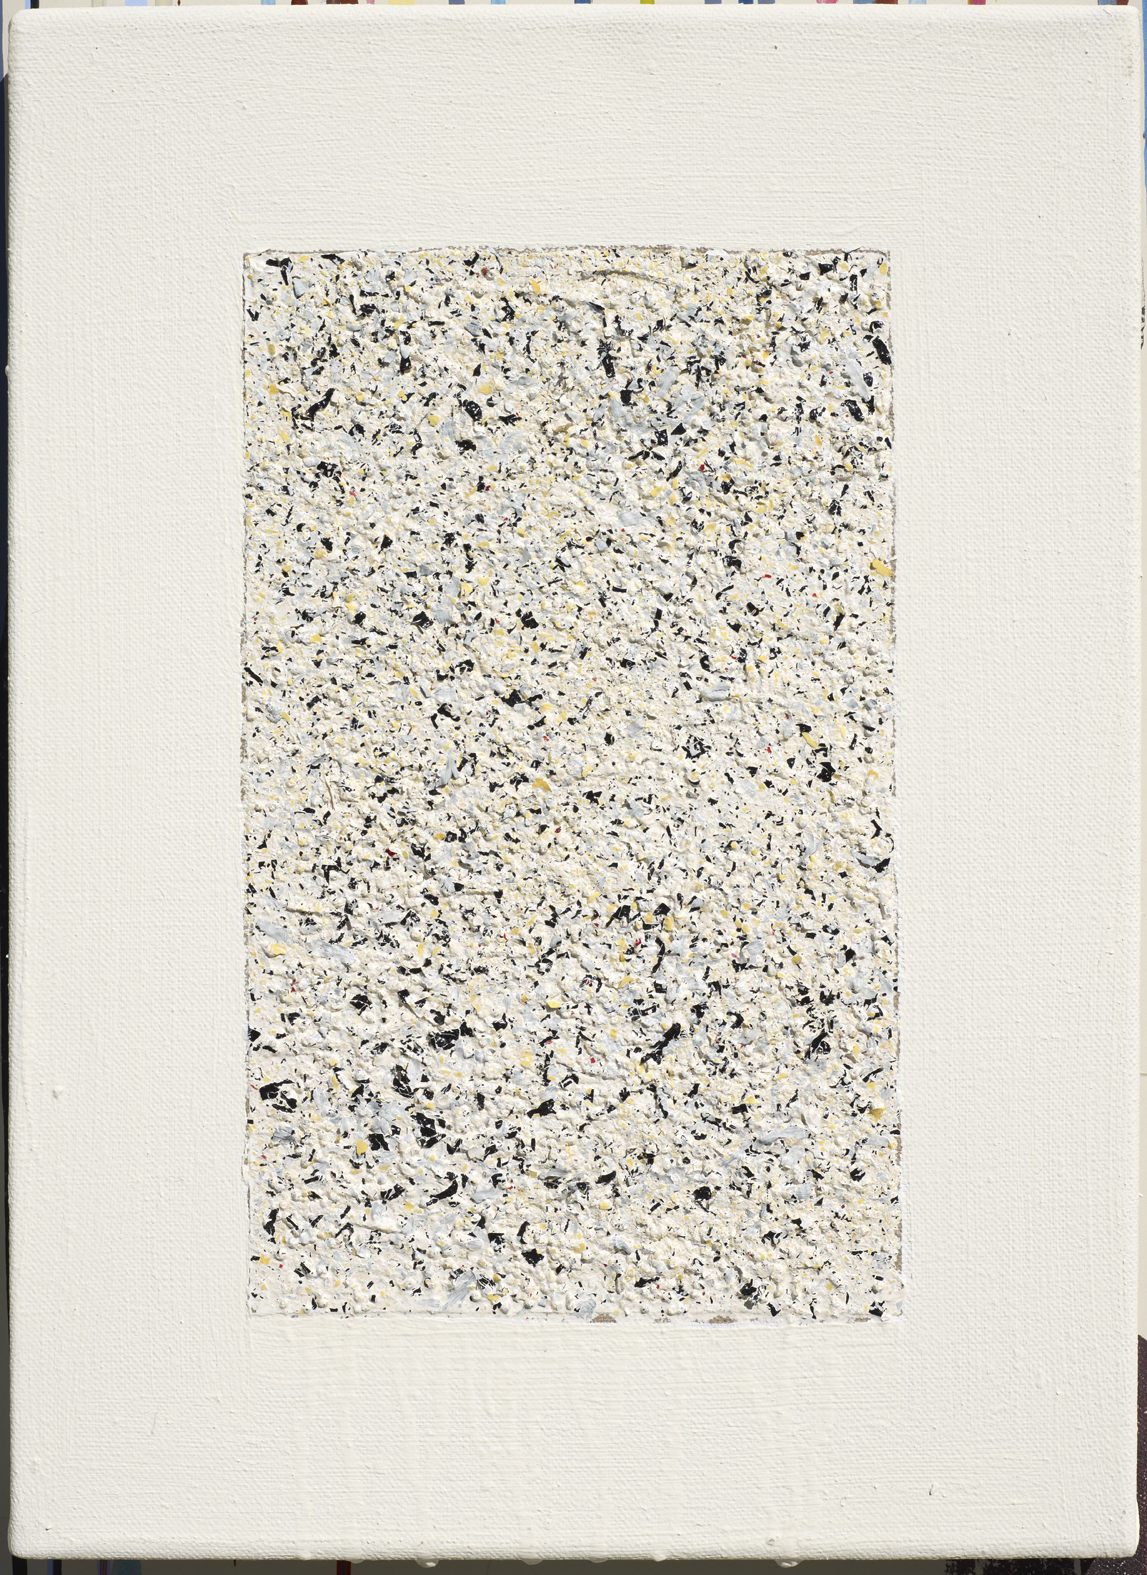 Eveline Kotai - Cosmos 1, 2010, paint flakes on linen, 30x20cm